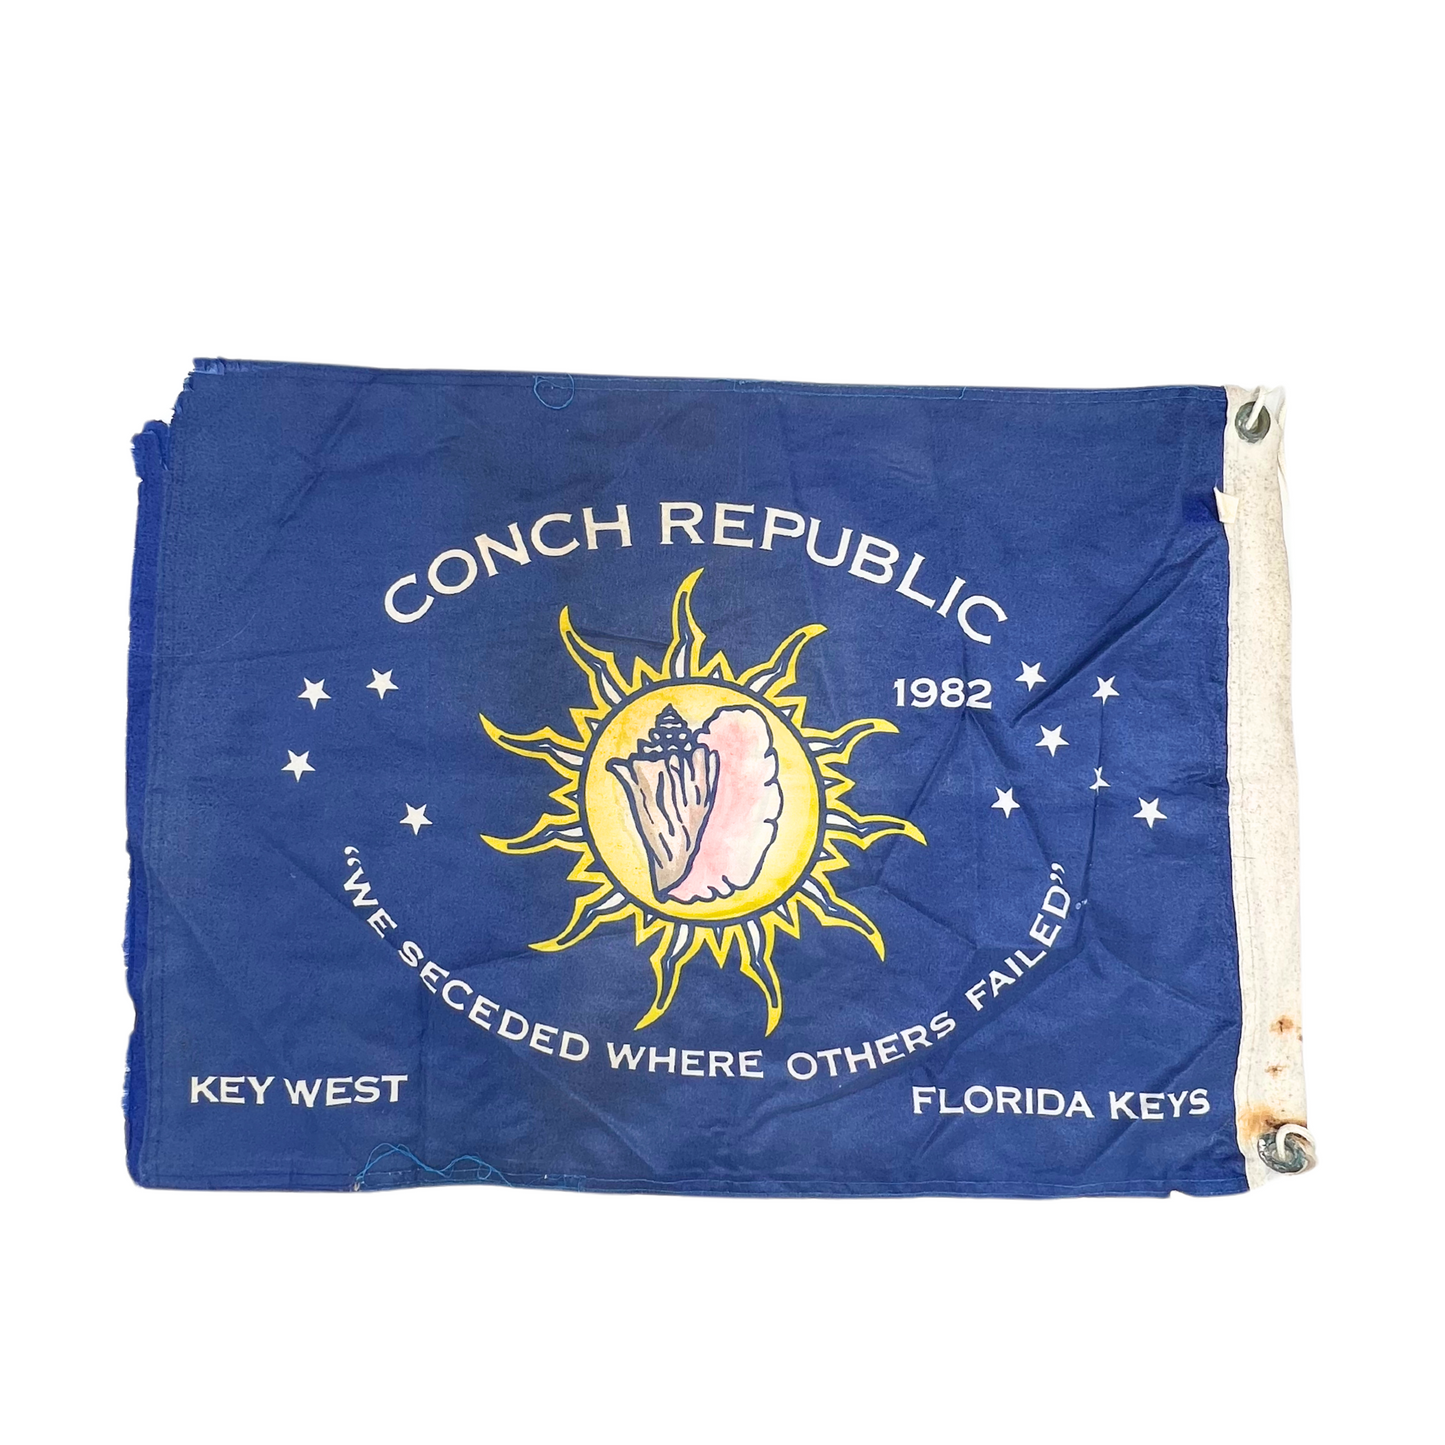 1982 Conch Republic flag